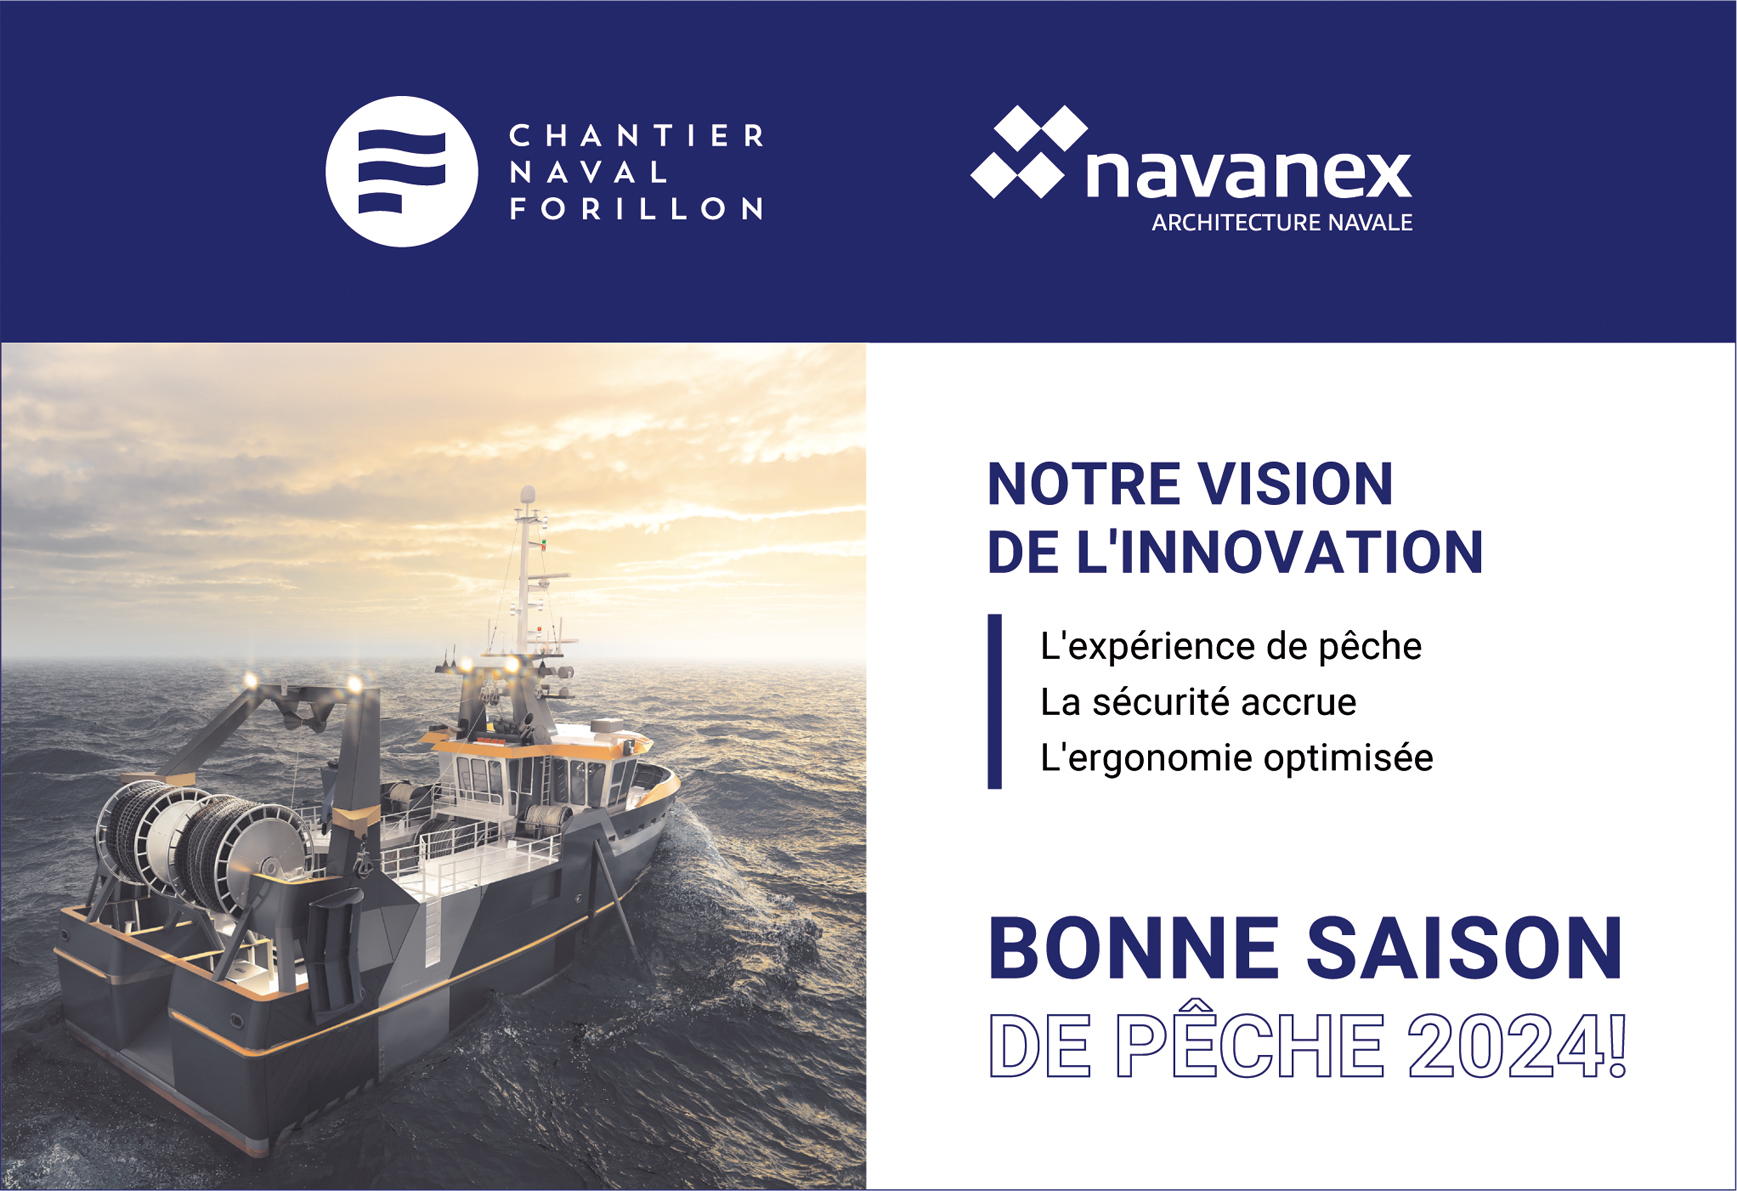 Chantier naval Forillon